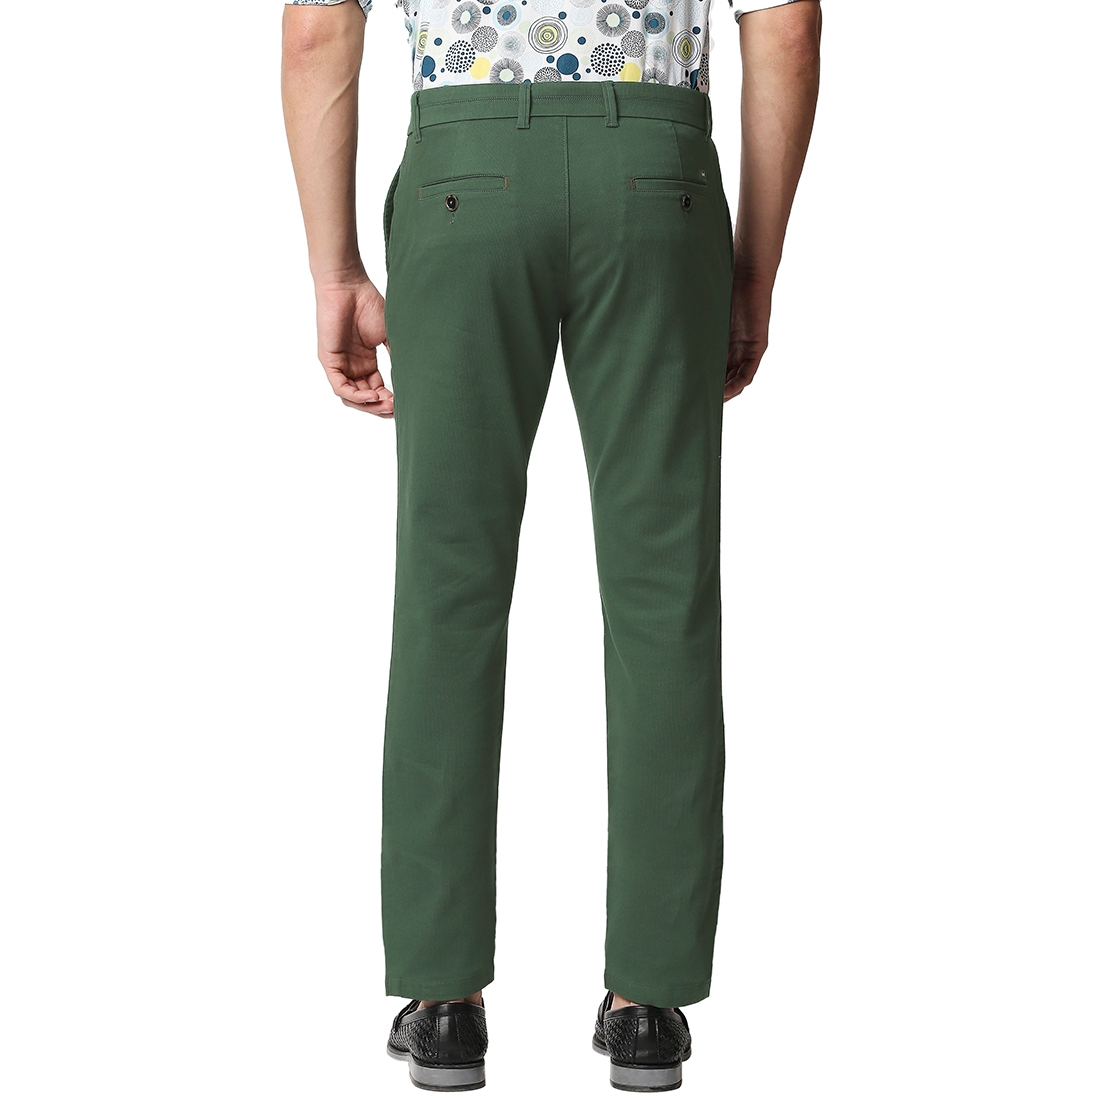 Men's Green Cotton Blend Solid Trouser